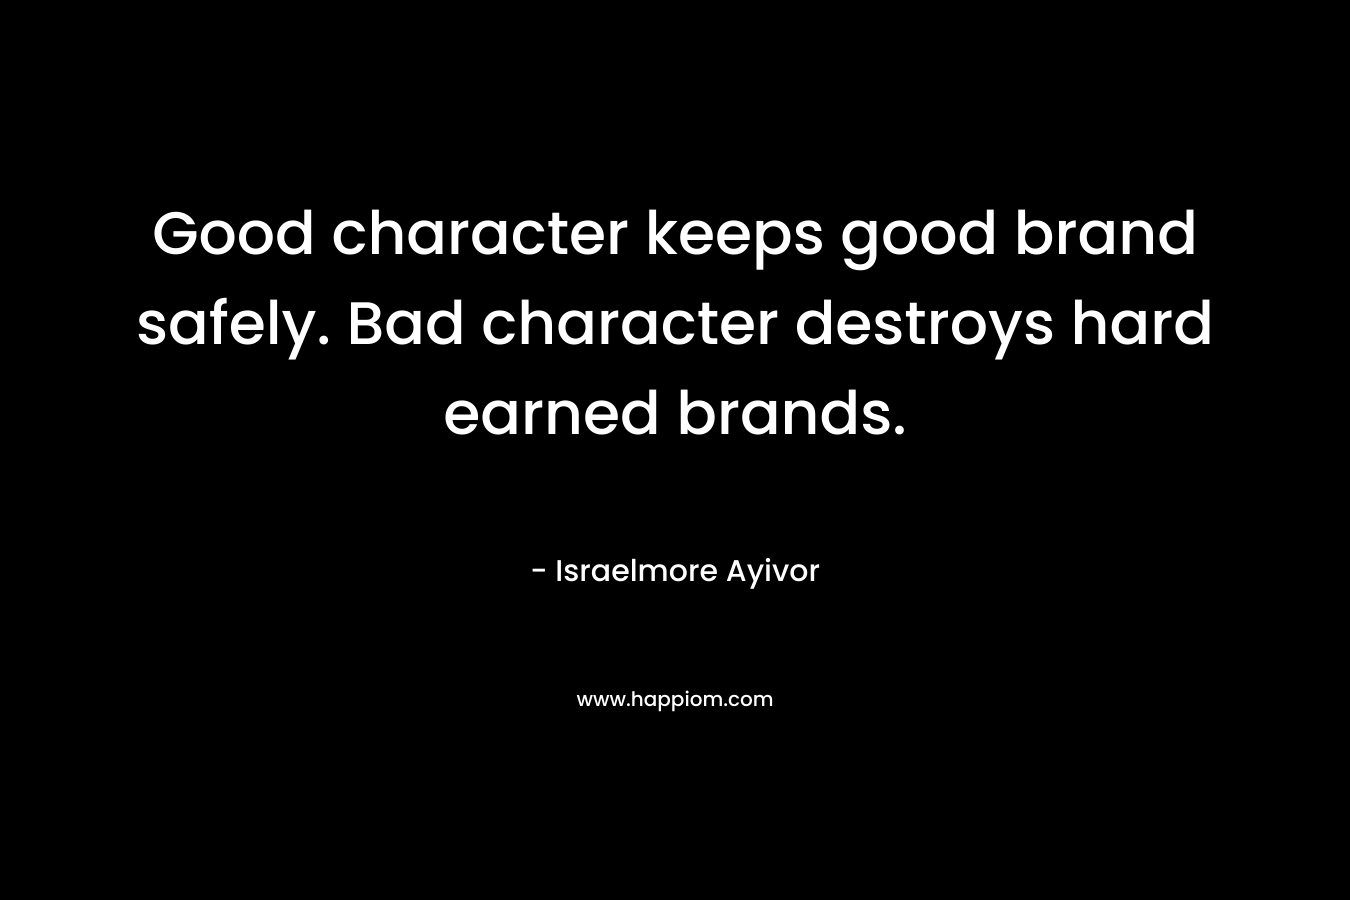 Good character keeps good brand safely. Bad character destroys hard earned brands.